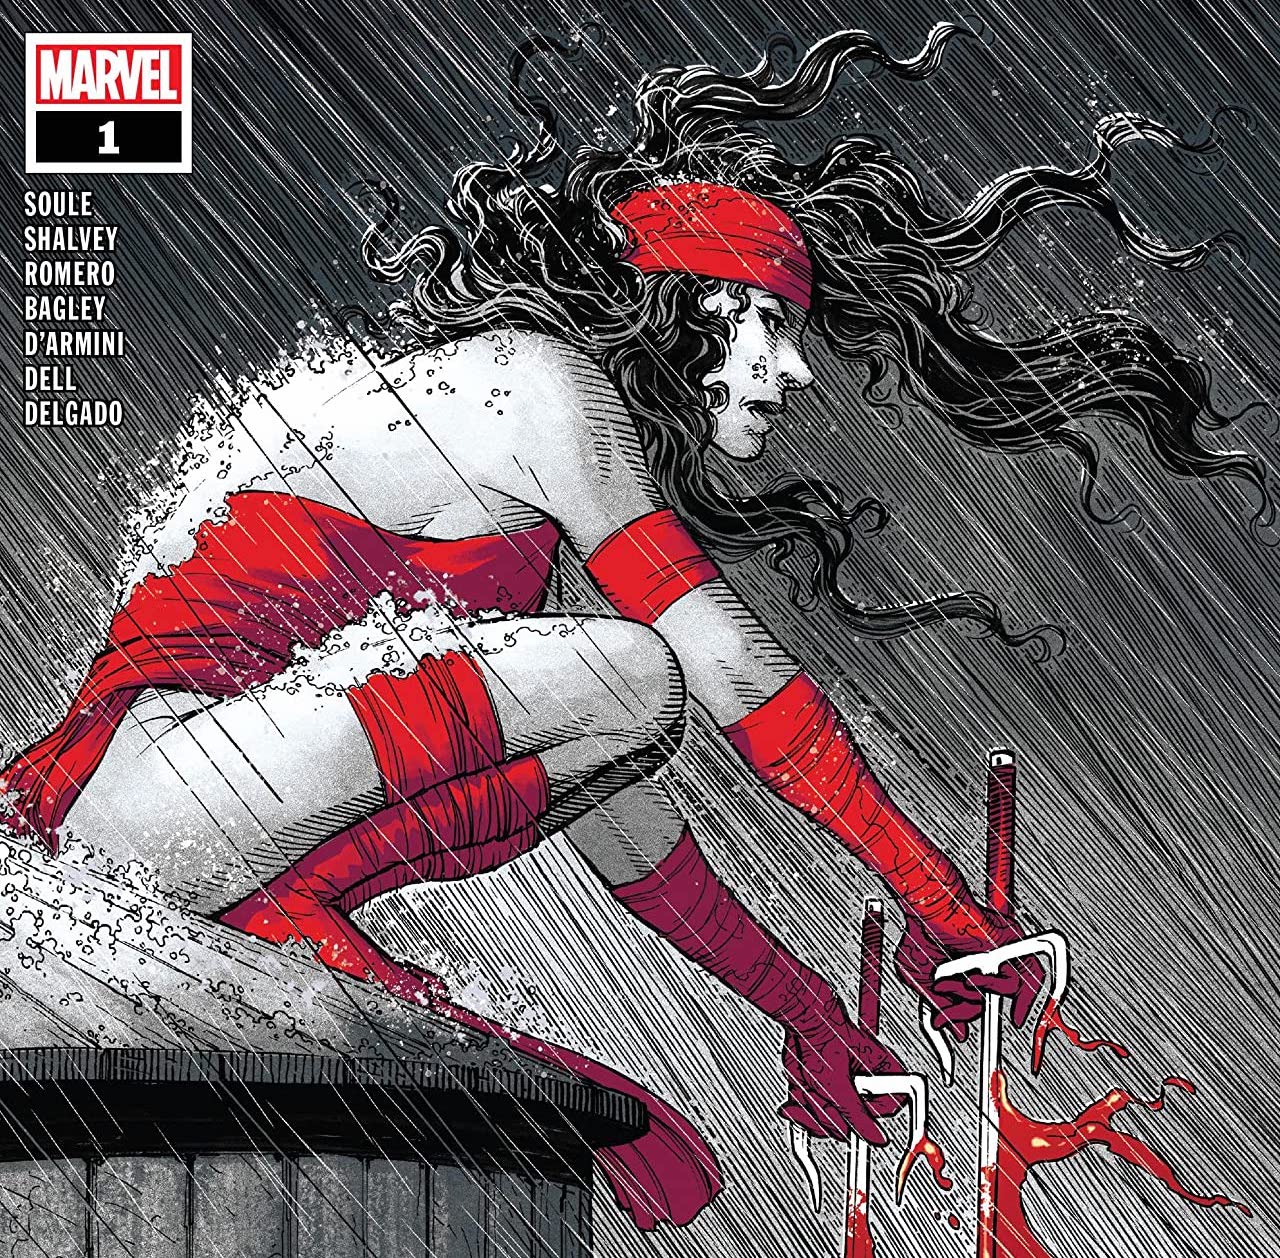 'Elektra: Black, White & Blood' #1 is bloody good